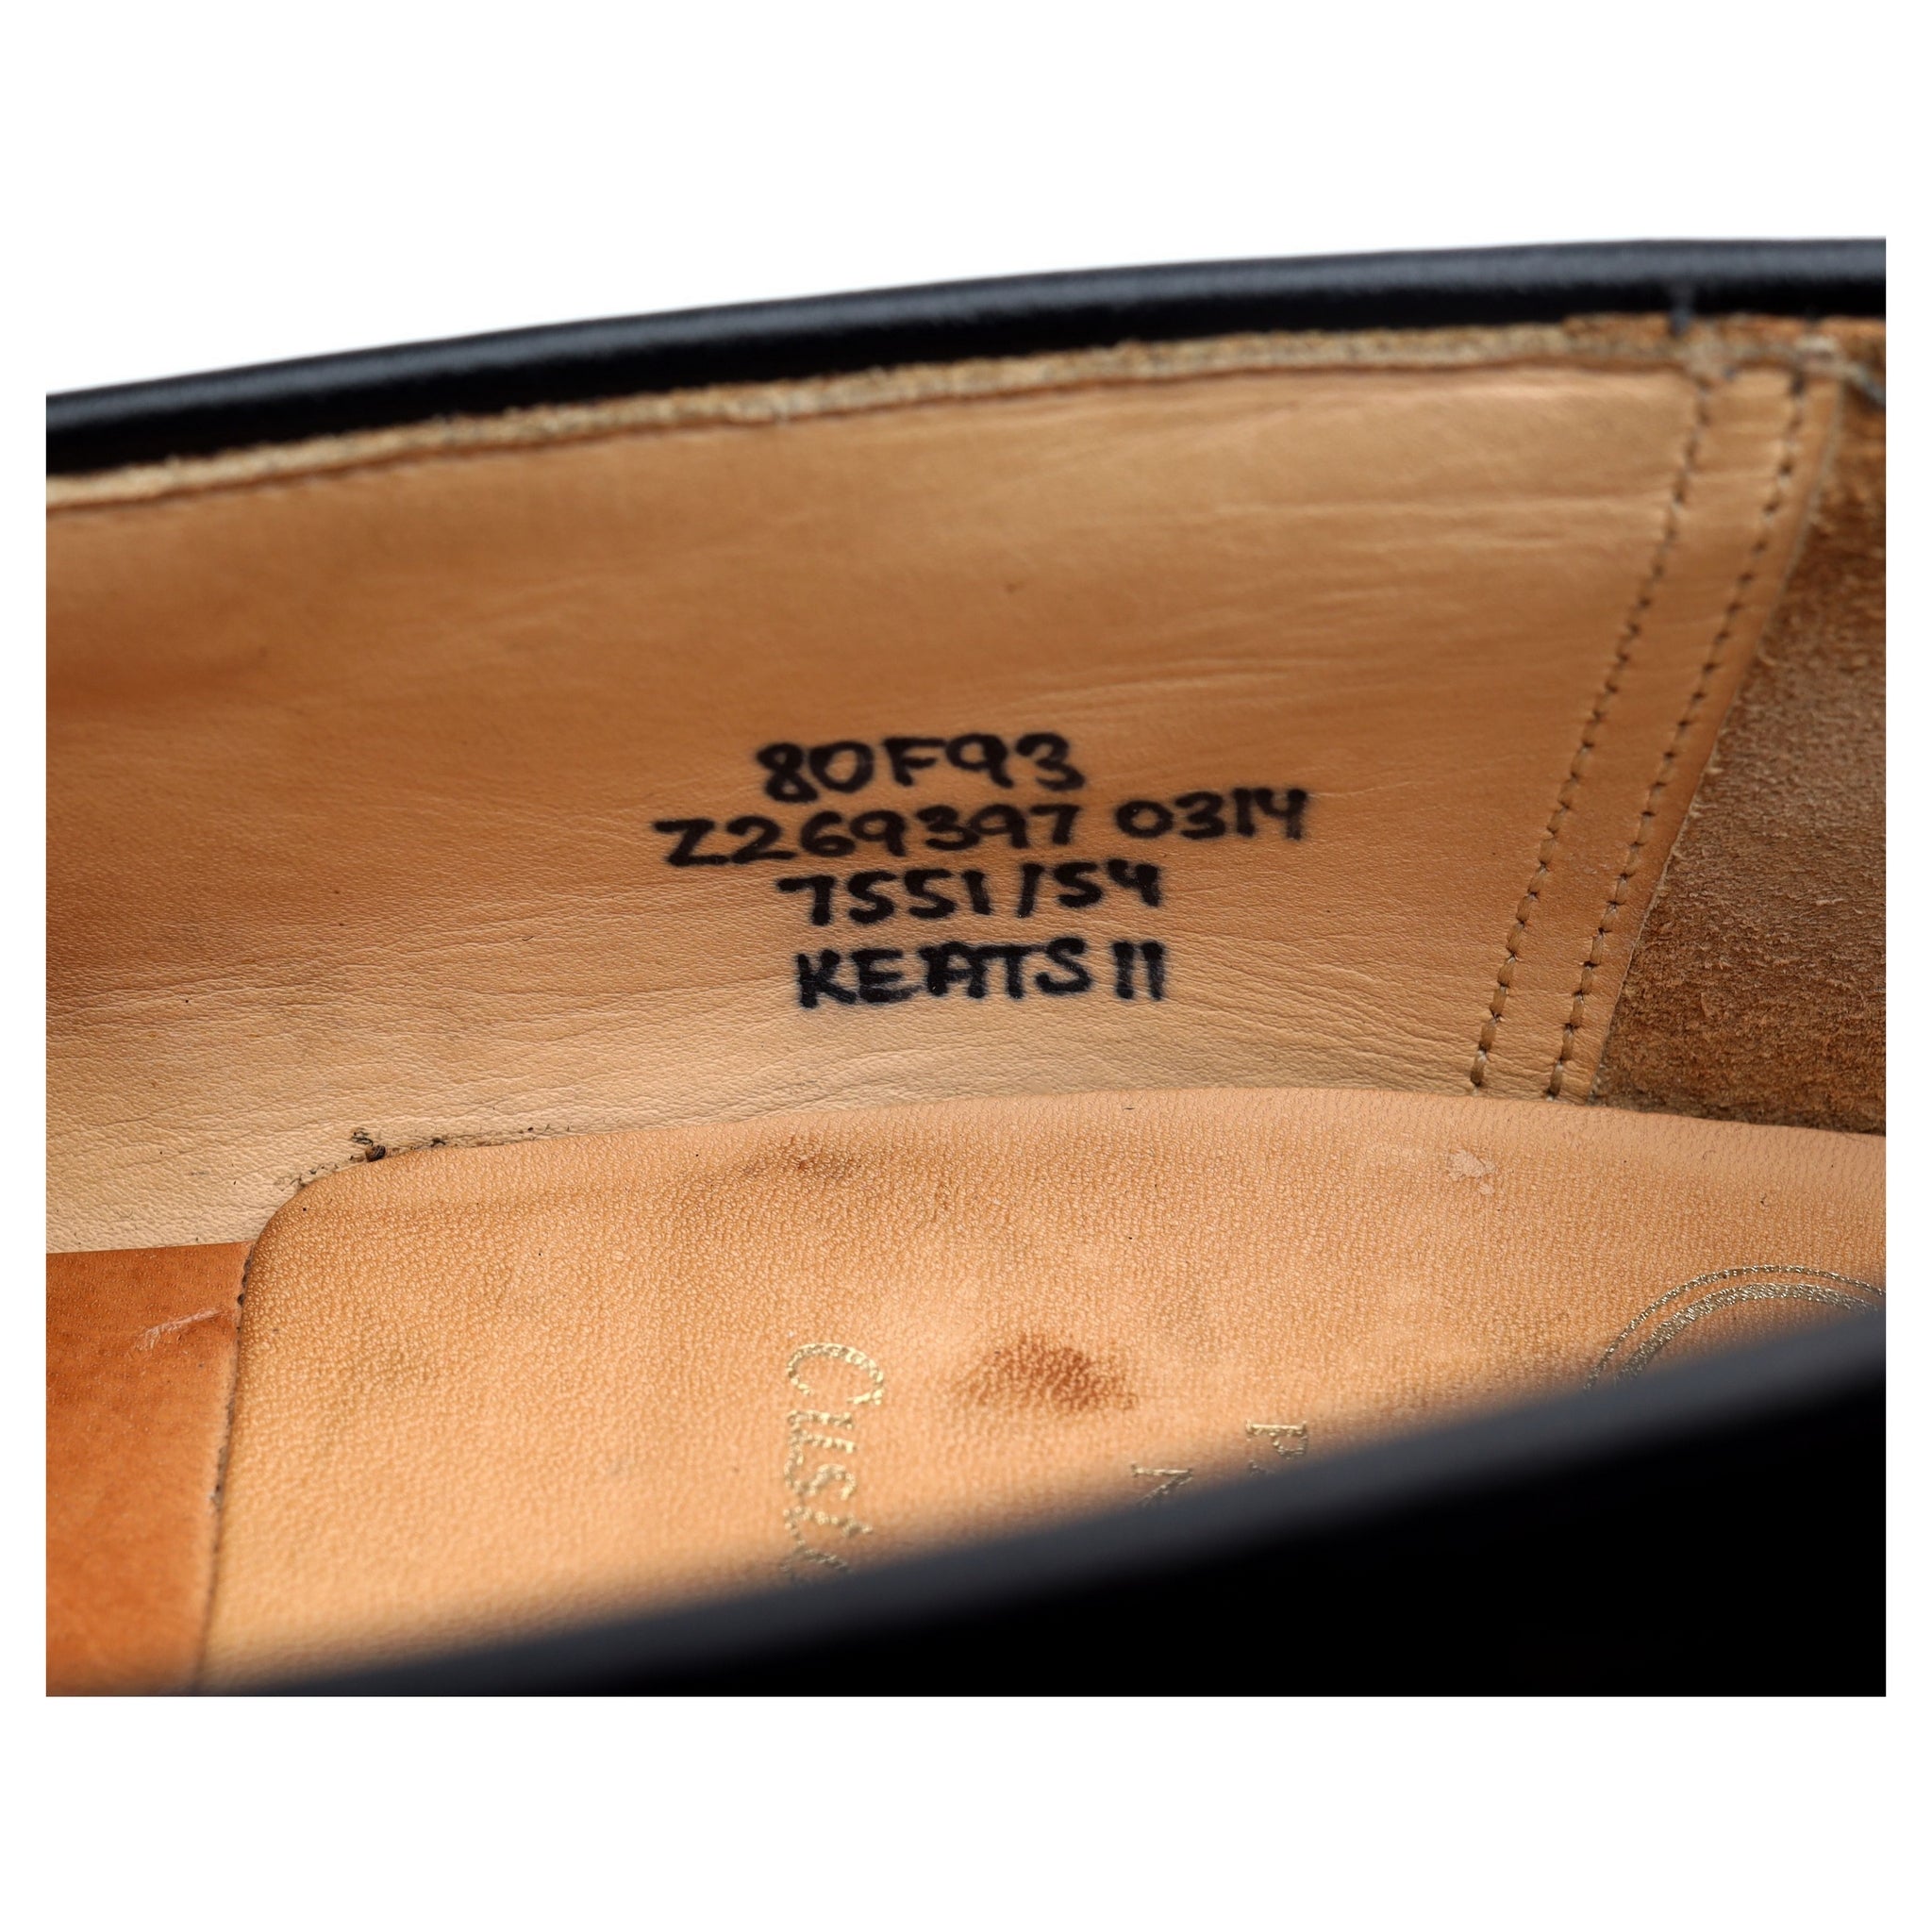 Keats II' Burgundy Leather Tassel Loafers UK 8 F - Abbot's Shoes